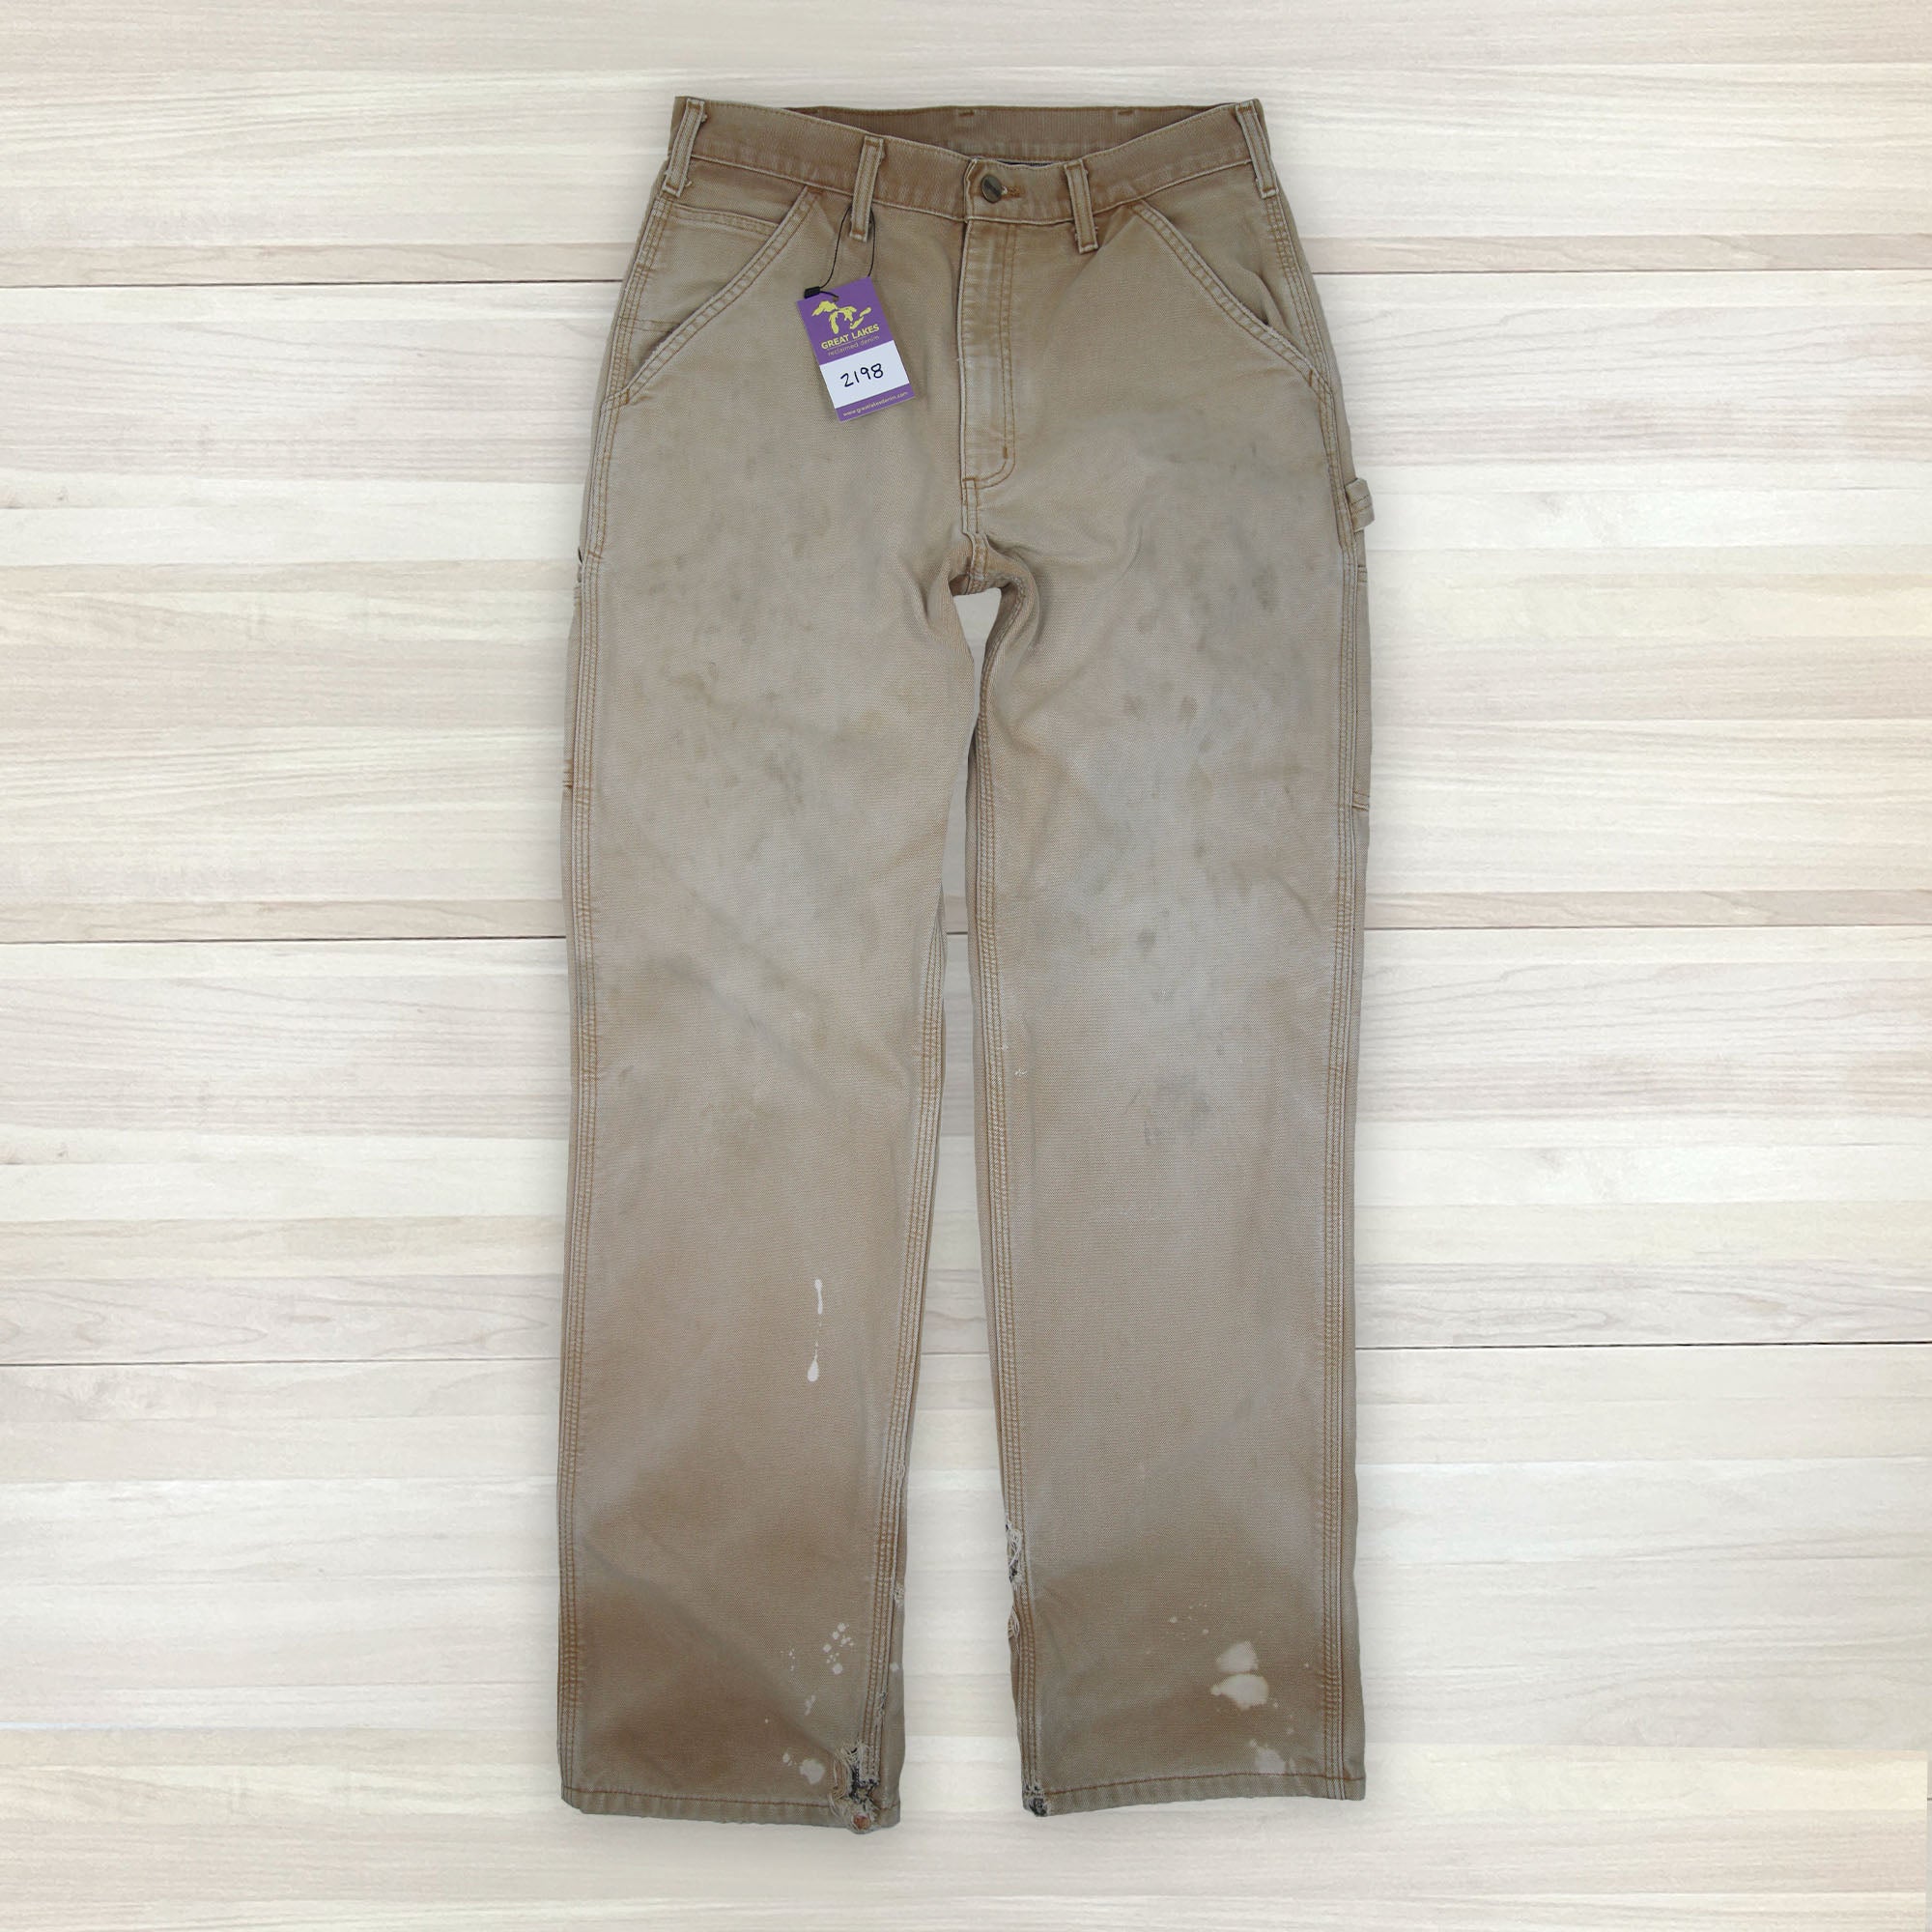 Men's Carhartt B111 BRN Flannel Lined Loose Fit Pants - Measures 30x33-1